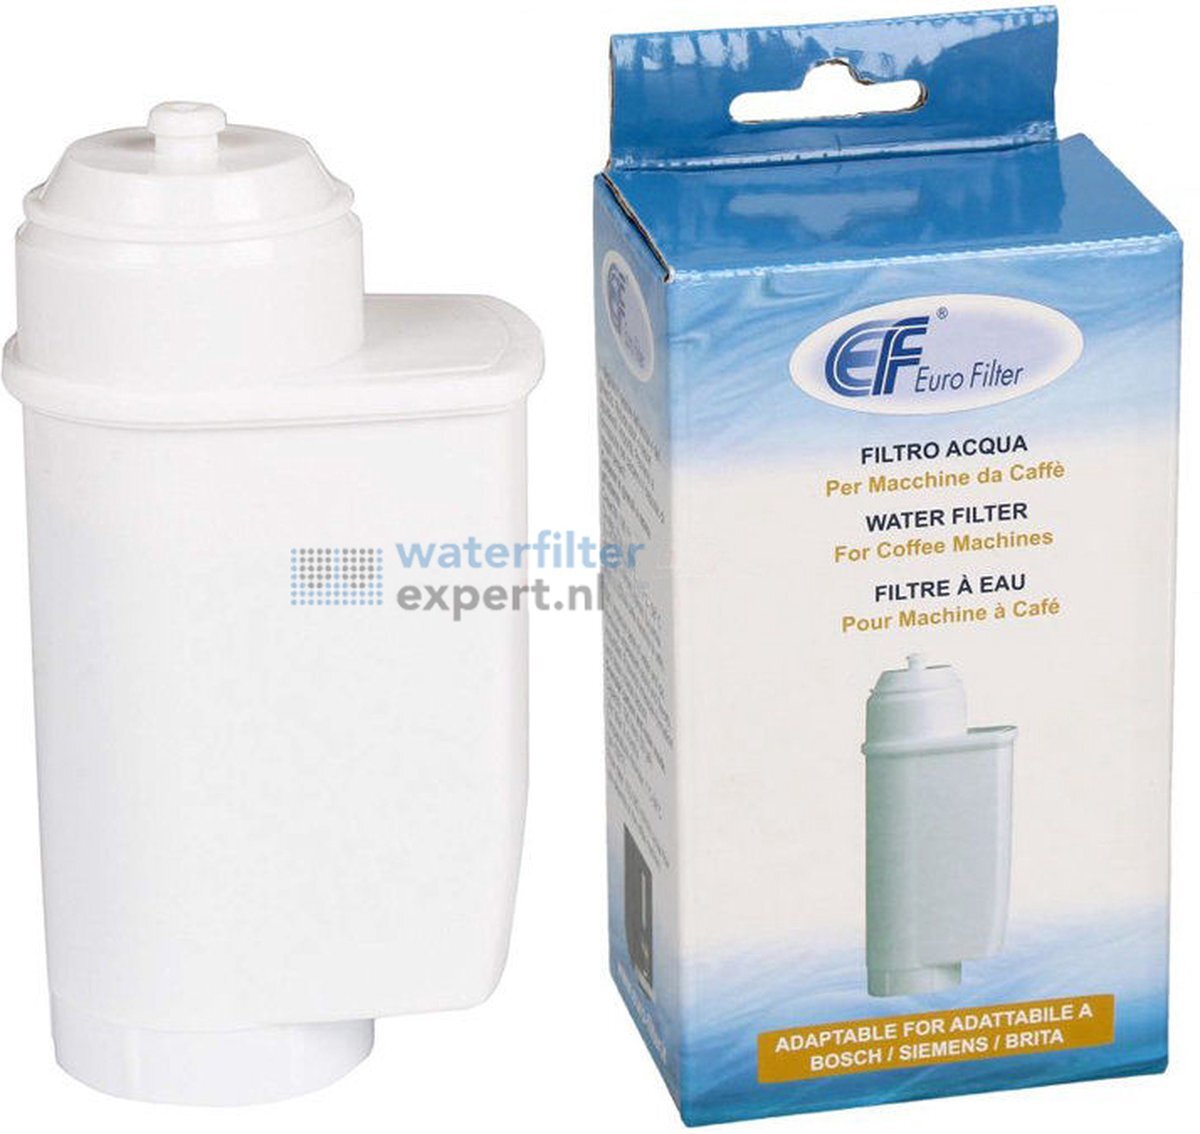 Eurofilter Euro Filter Waterfilter WF044 Voor 17000705 / 00575491 / TCZ7003 / TZ70003 / 575491 / Brita Intenza